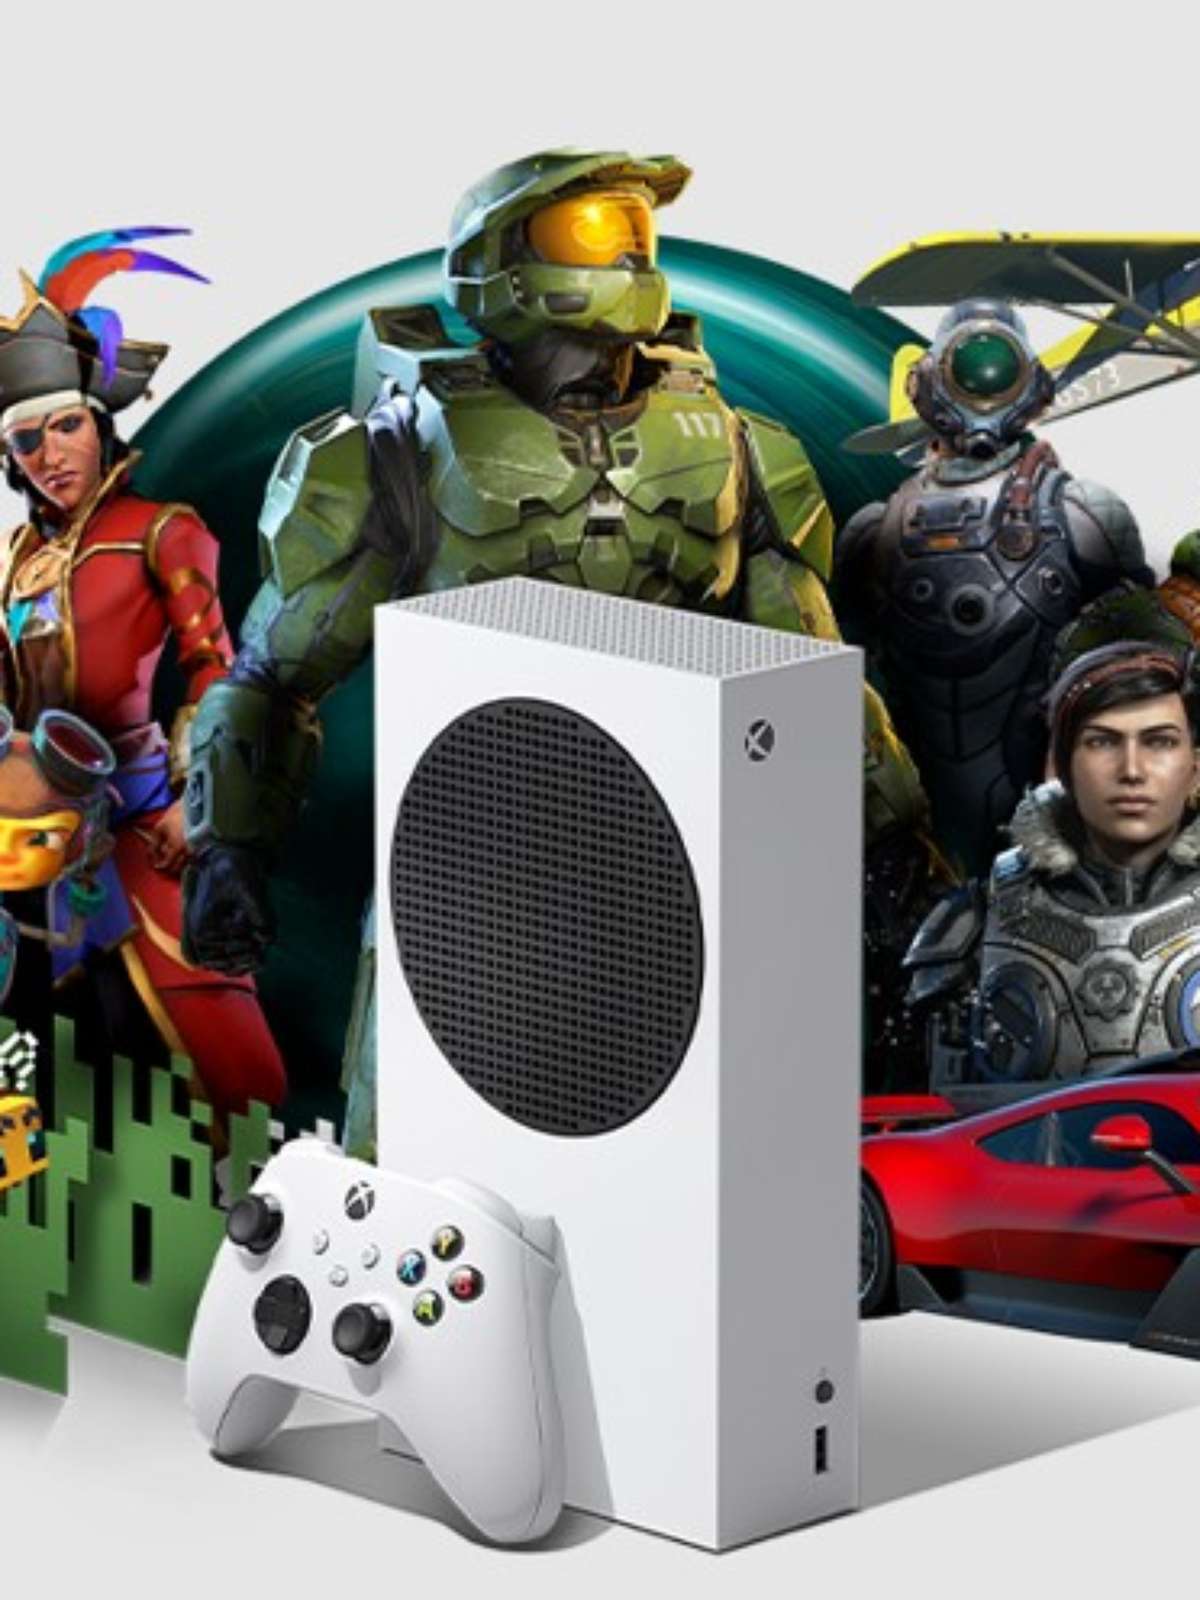 9 games exclusivos de Xbox que chegam em 2022 - Canaltech